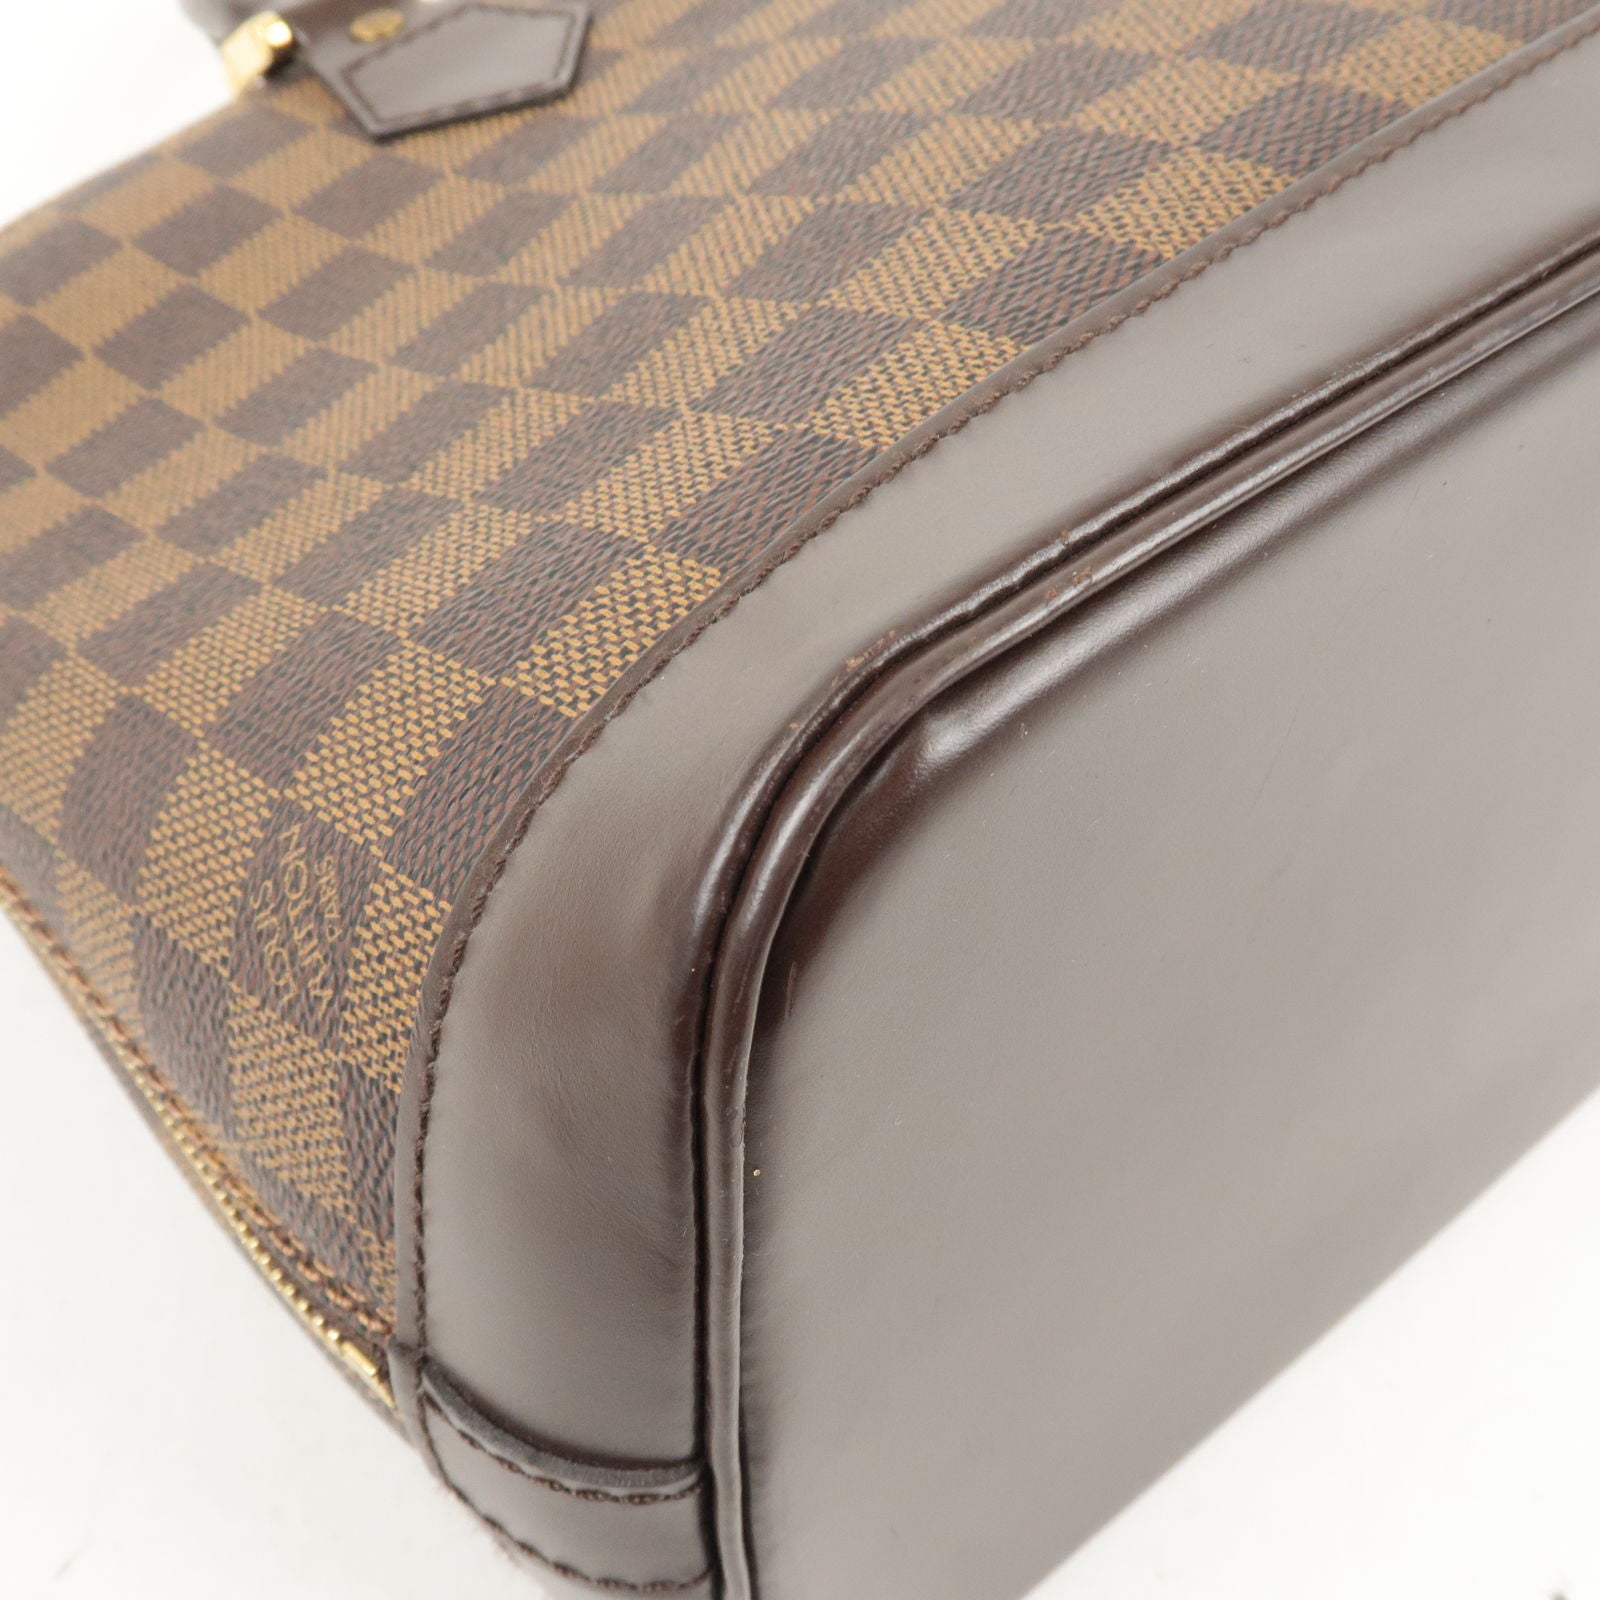 Authentic Louis Vuitton Hand Bag N51131 Alma Ebene Brown Damier